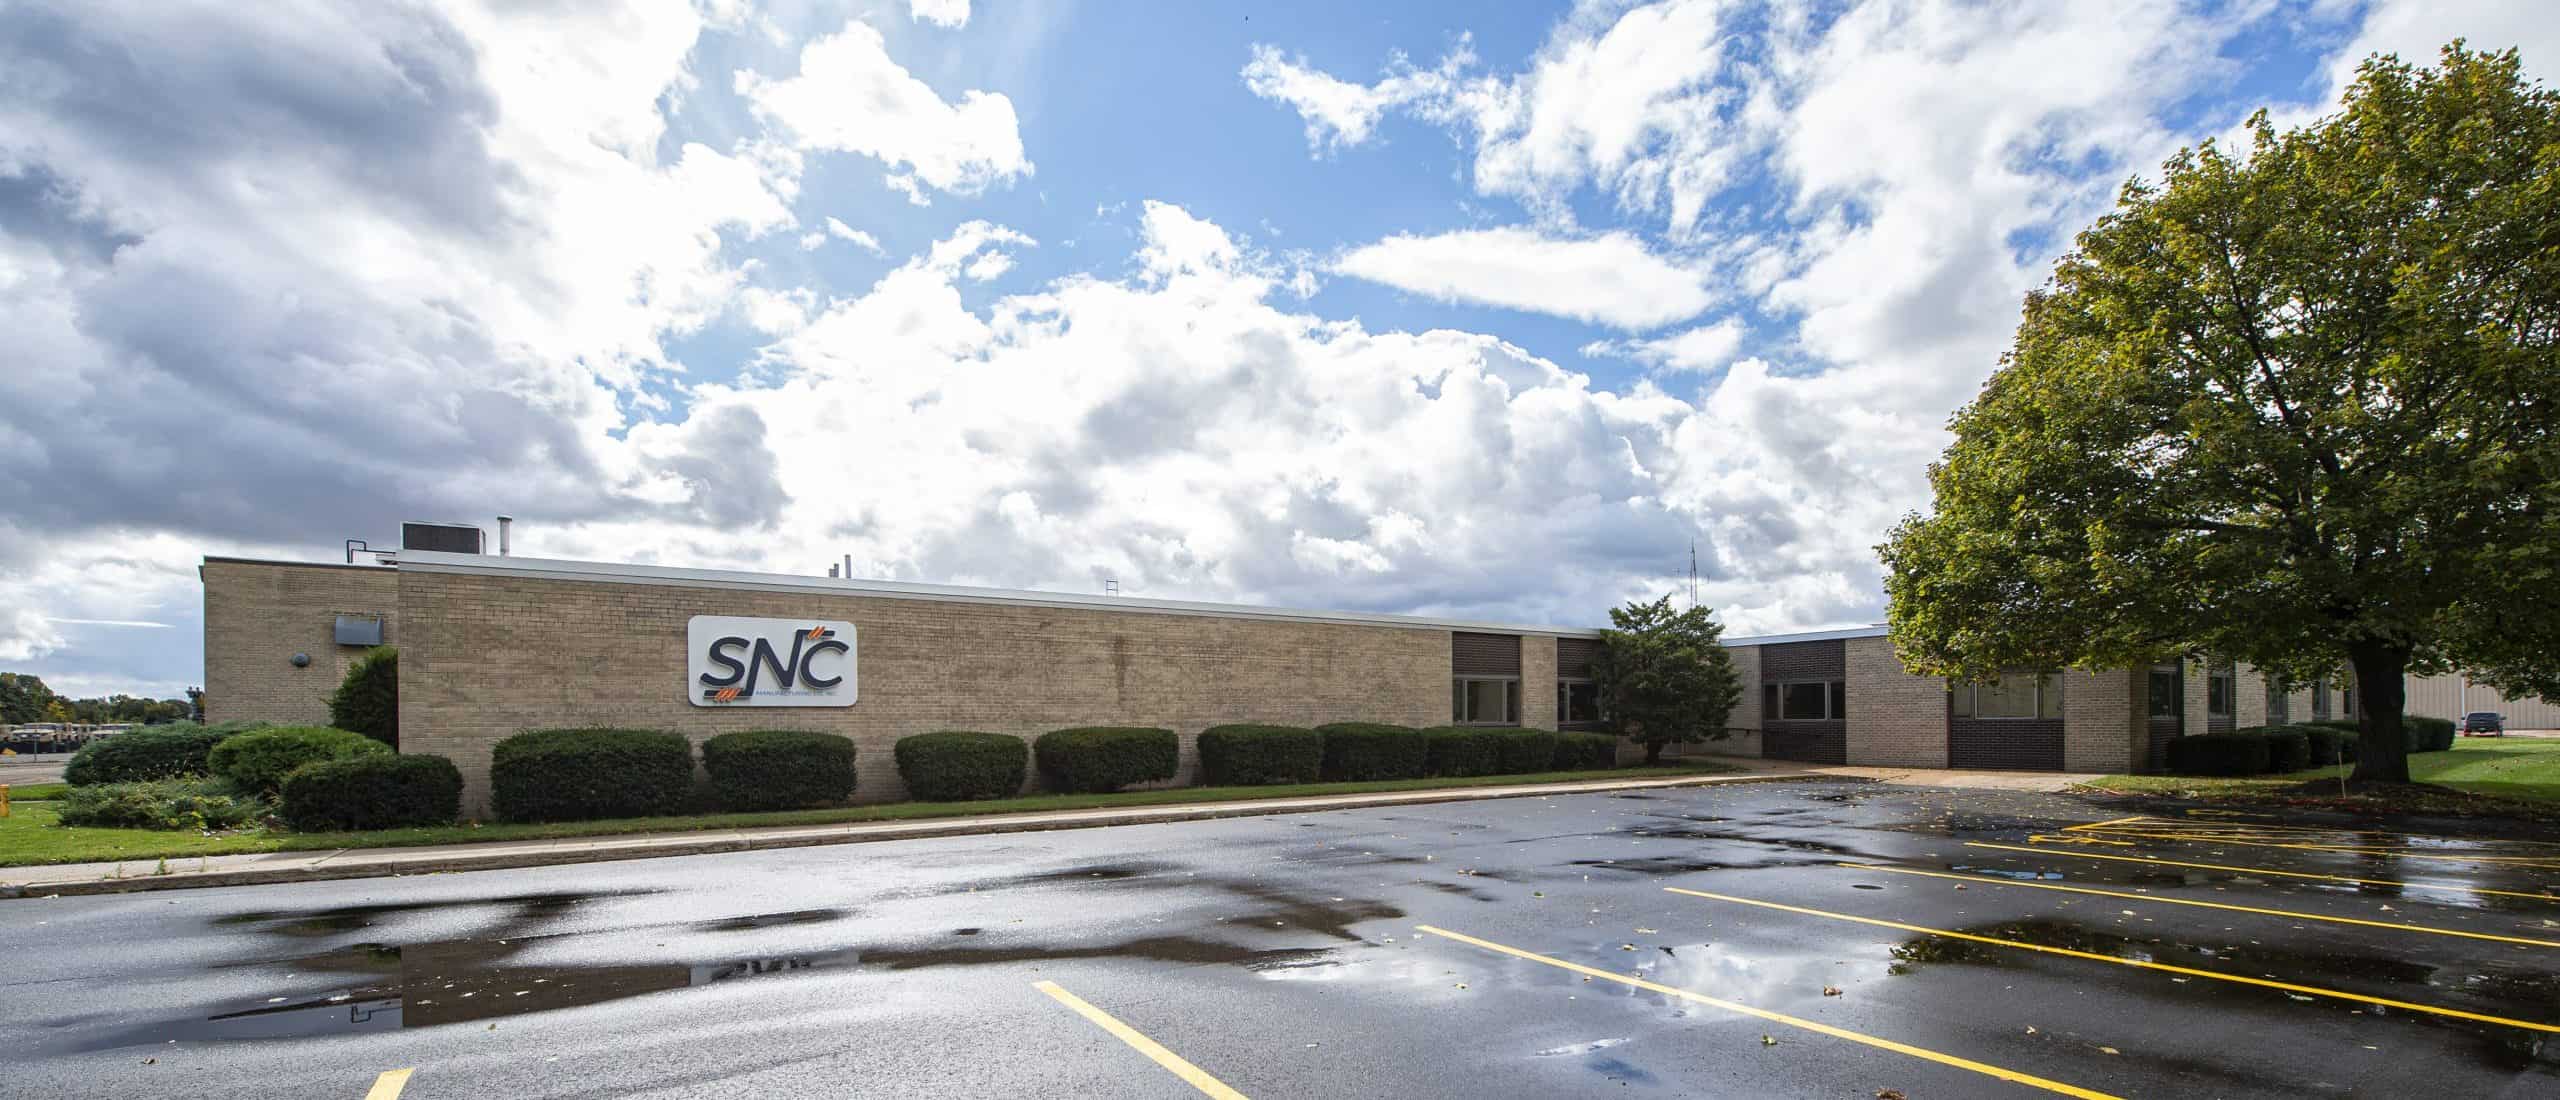 SNC Manufacturing Co., Inc. building exterior.